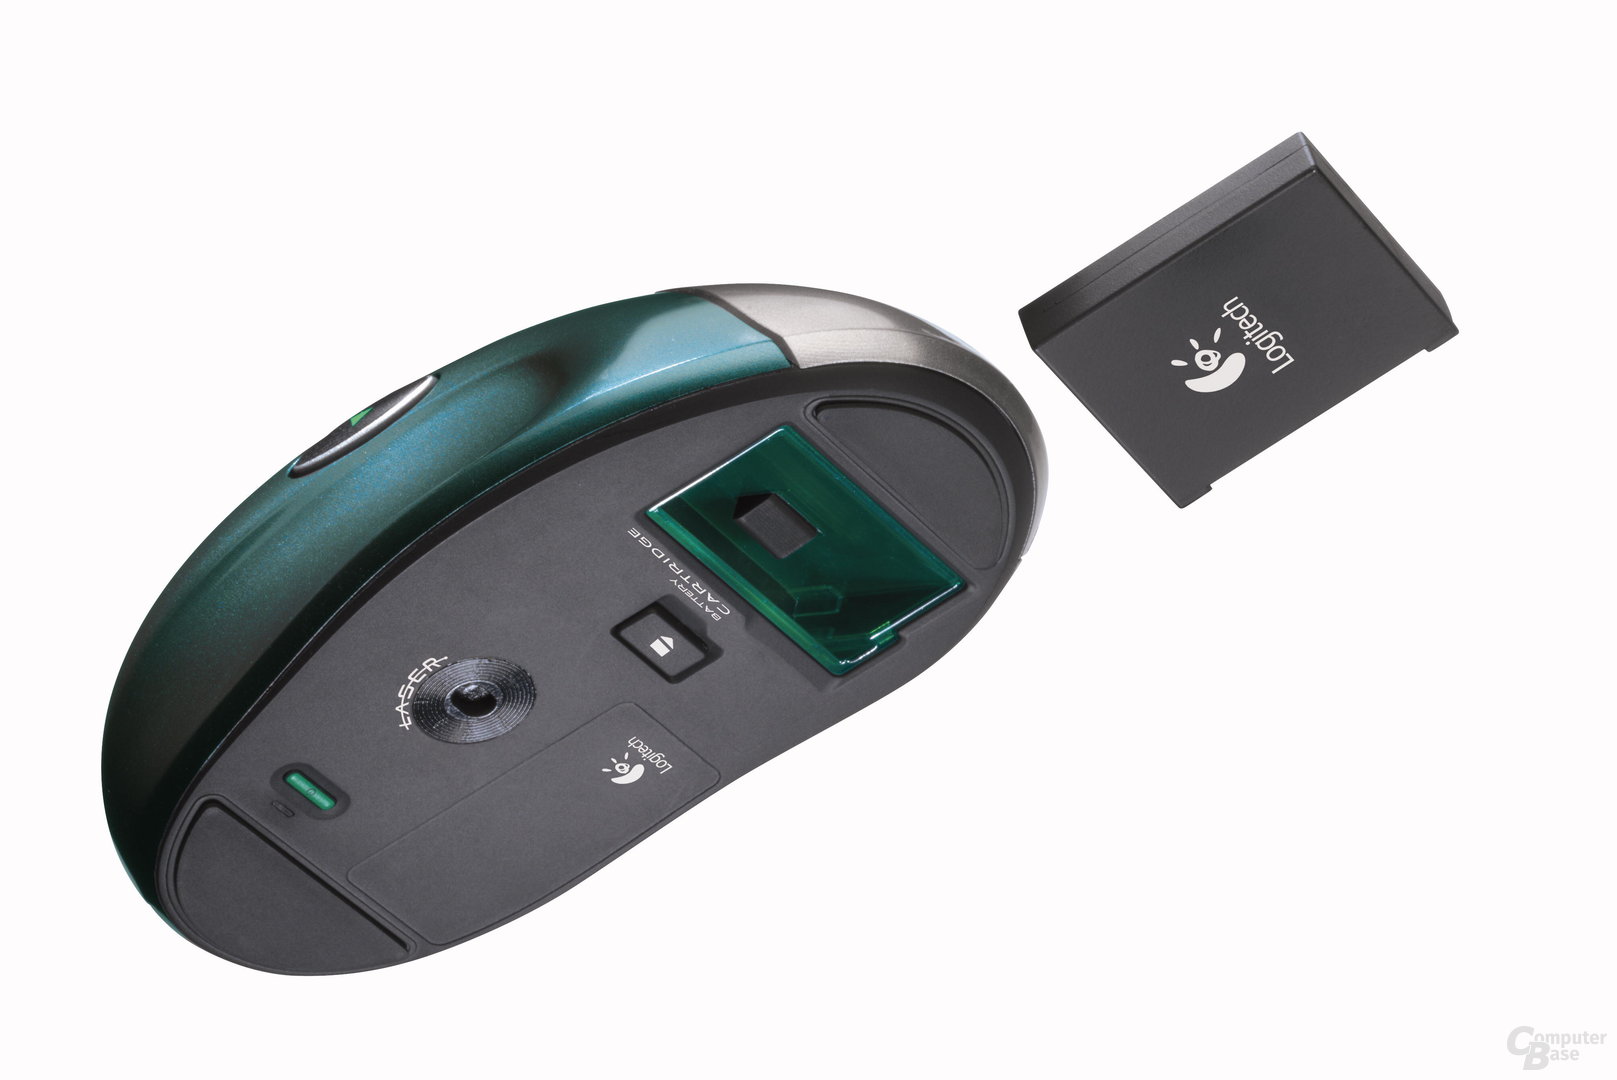 Unterseite der Logitech G7 Laser Cordless Mouse